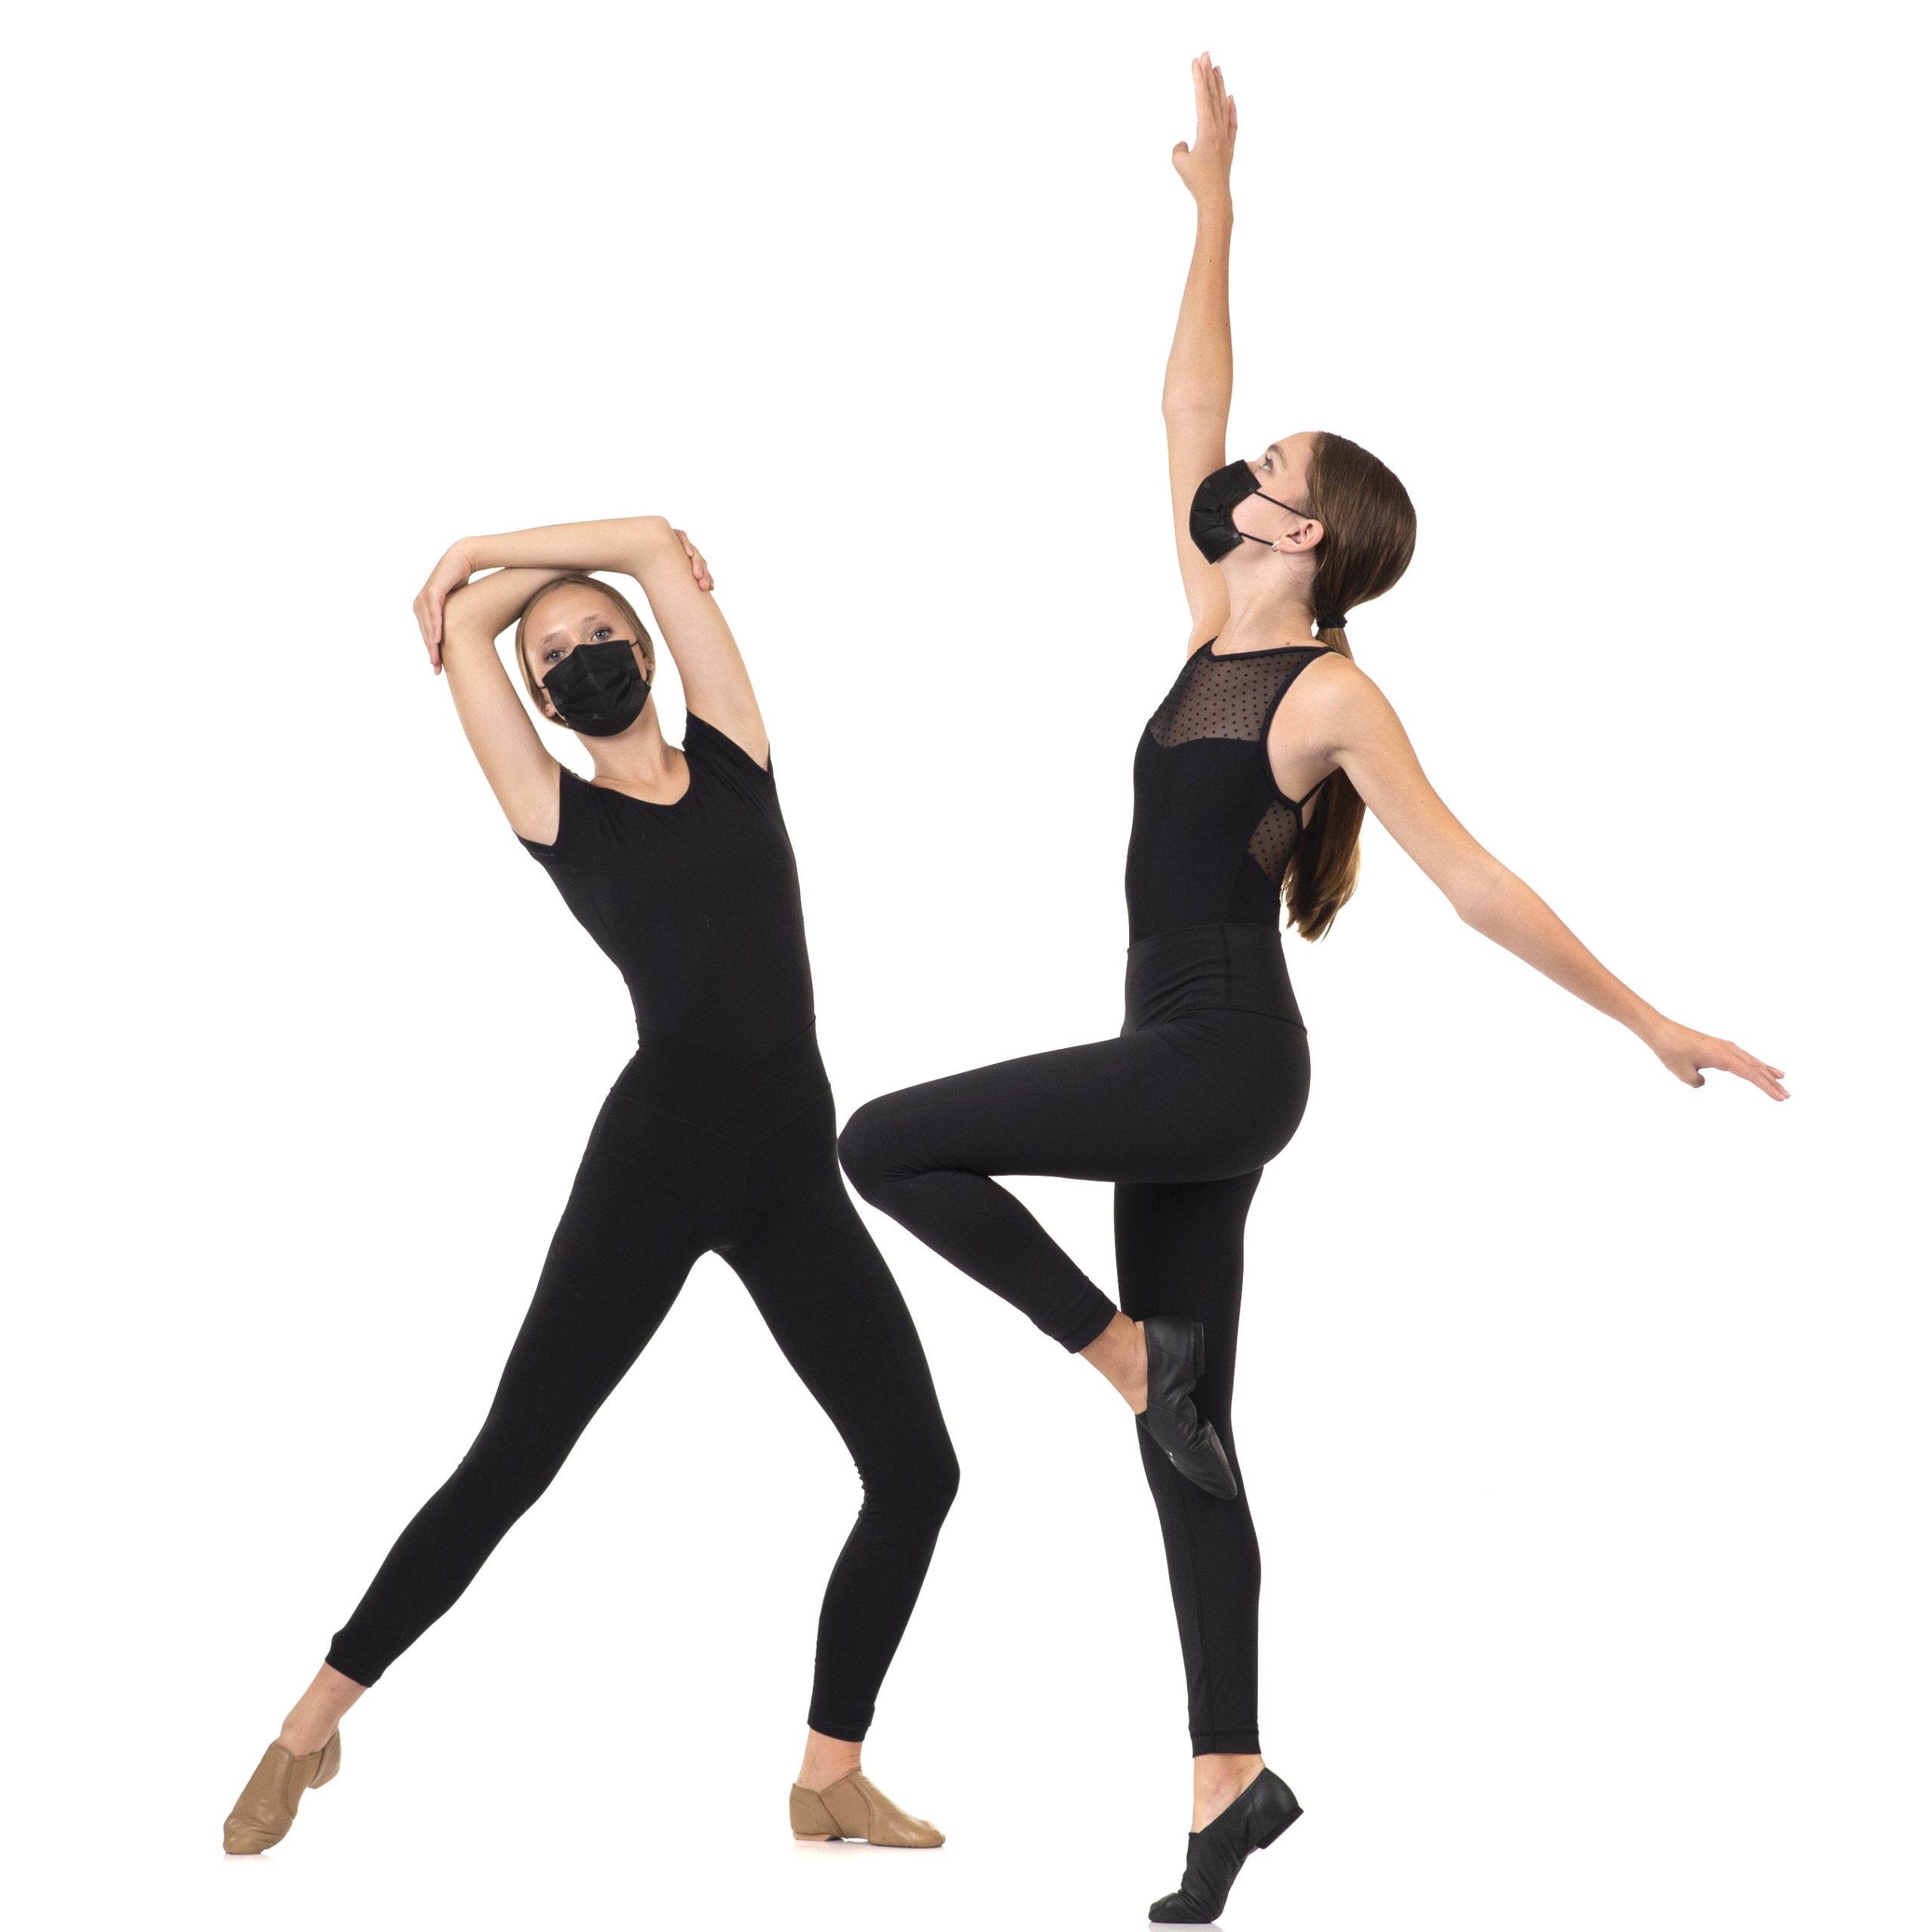 2 dancers strike a pose